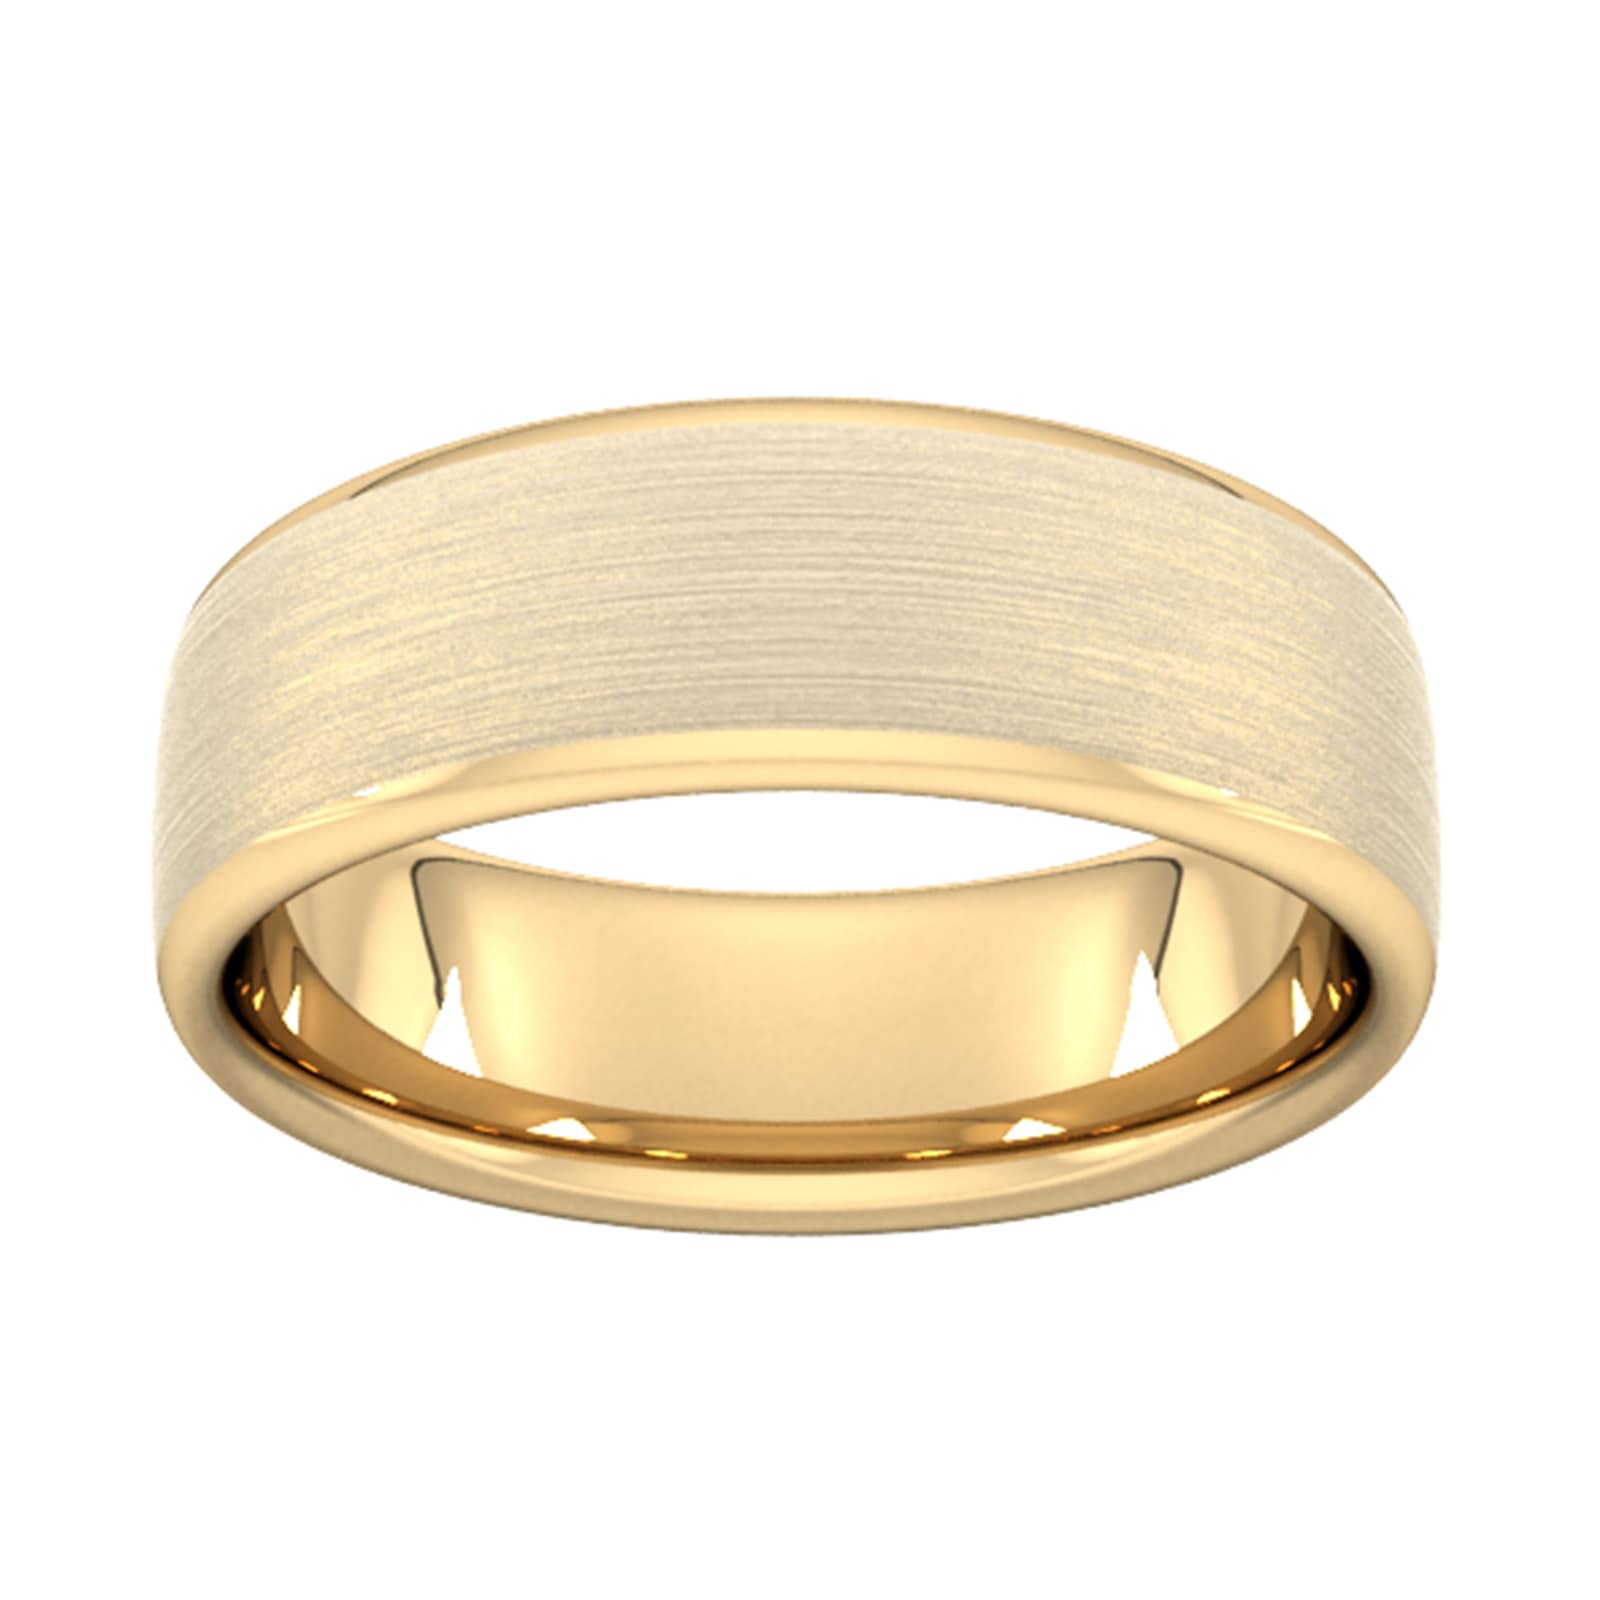 7mm Slight Court Standard Matt Finished Wedding Ring In 9 Carat Yellow Gold - Ring Size P